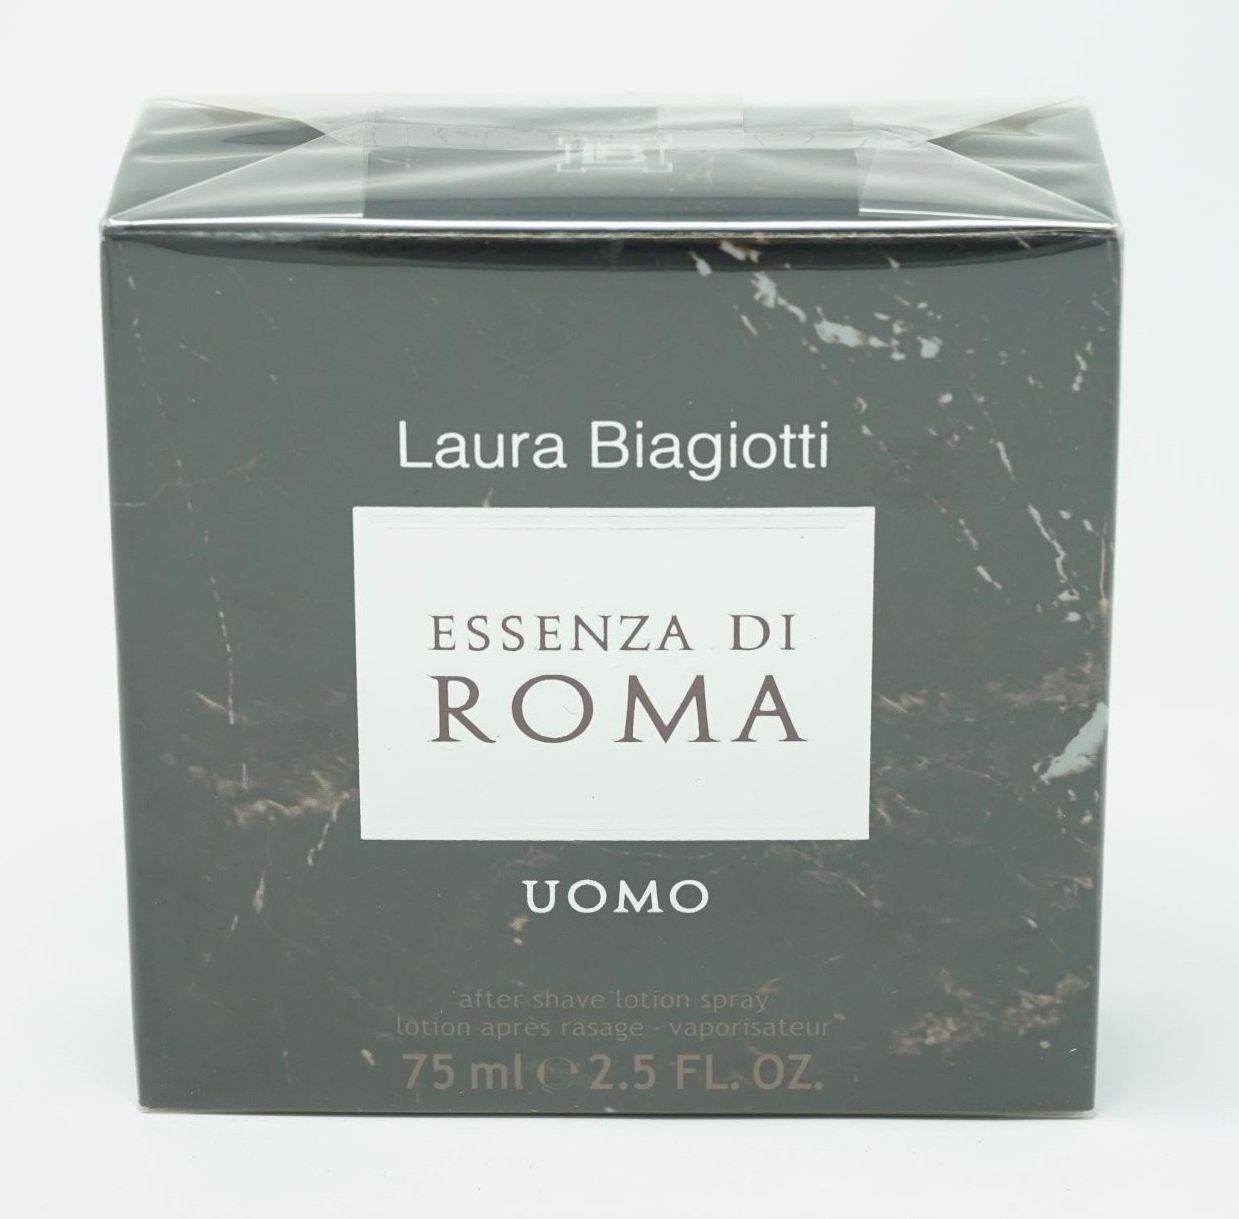 75ml Biagiotti Laura di Biagiotti Laura Essenza - Roma Shave Uomo After After-Shave